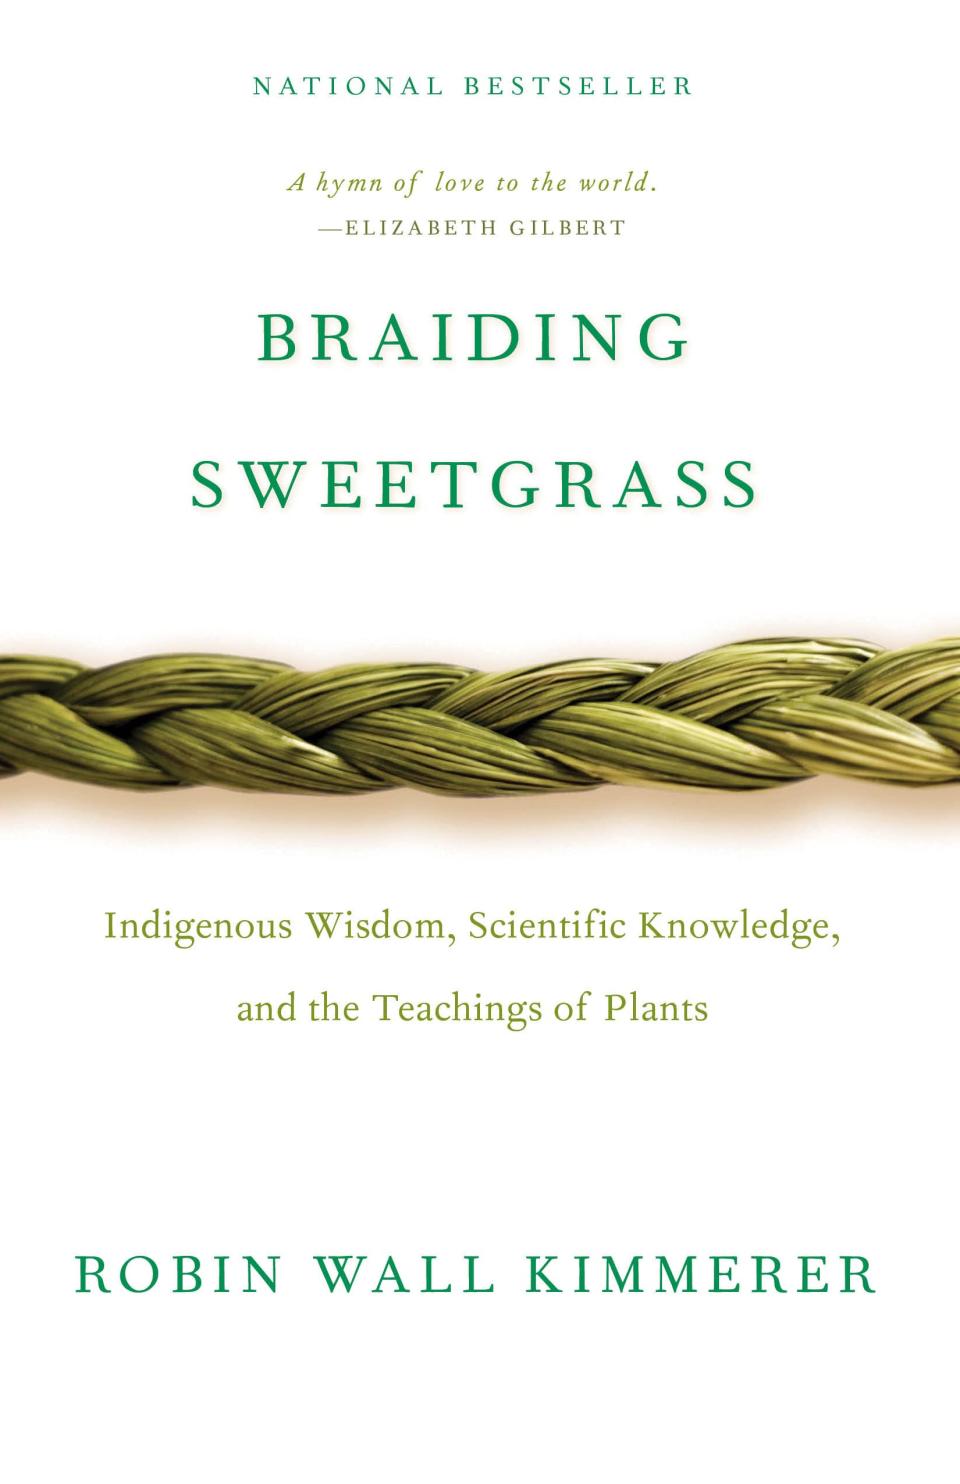 "Braiding Sweetgrass"